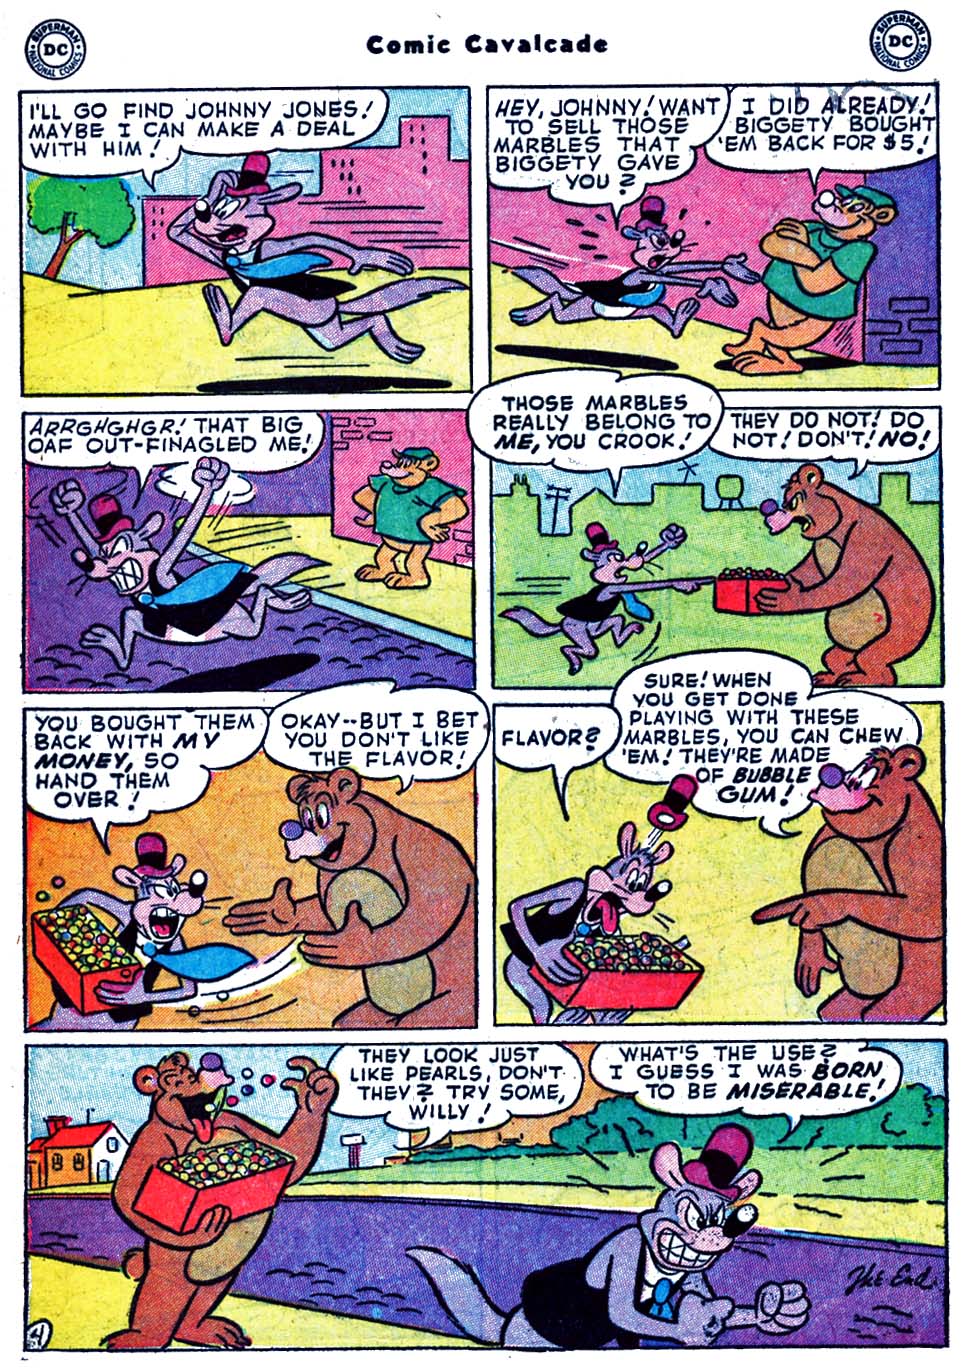 Comic Cavalcade issue 55 - Page 62